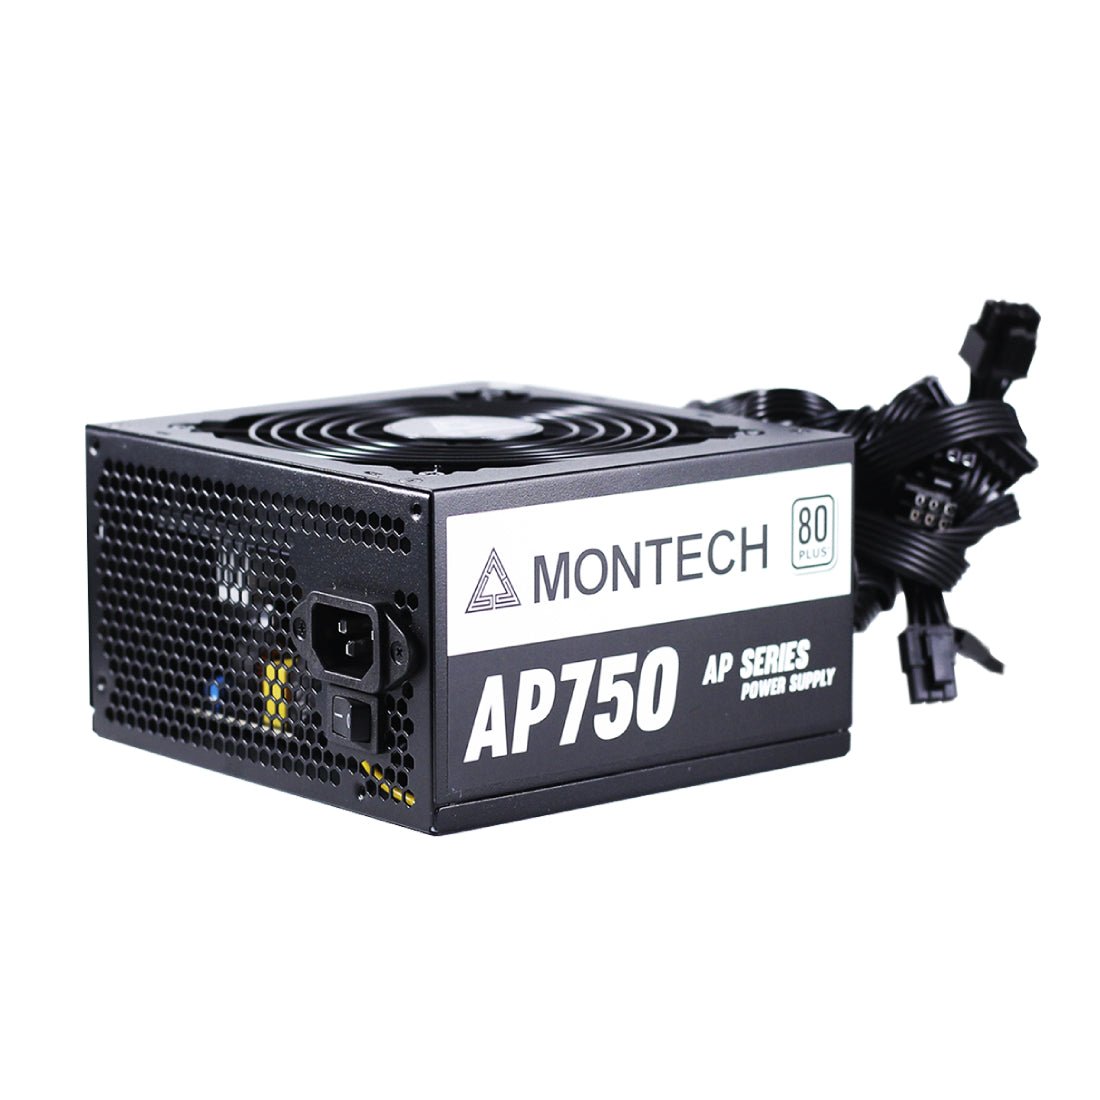 Montech AP750 750W 80+ White Non Modular Power Supply - مزود الطاقة - Store 974 | ستور ٩٧٤